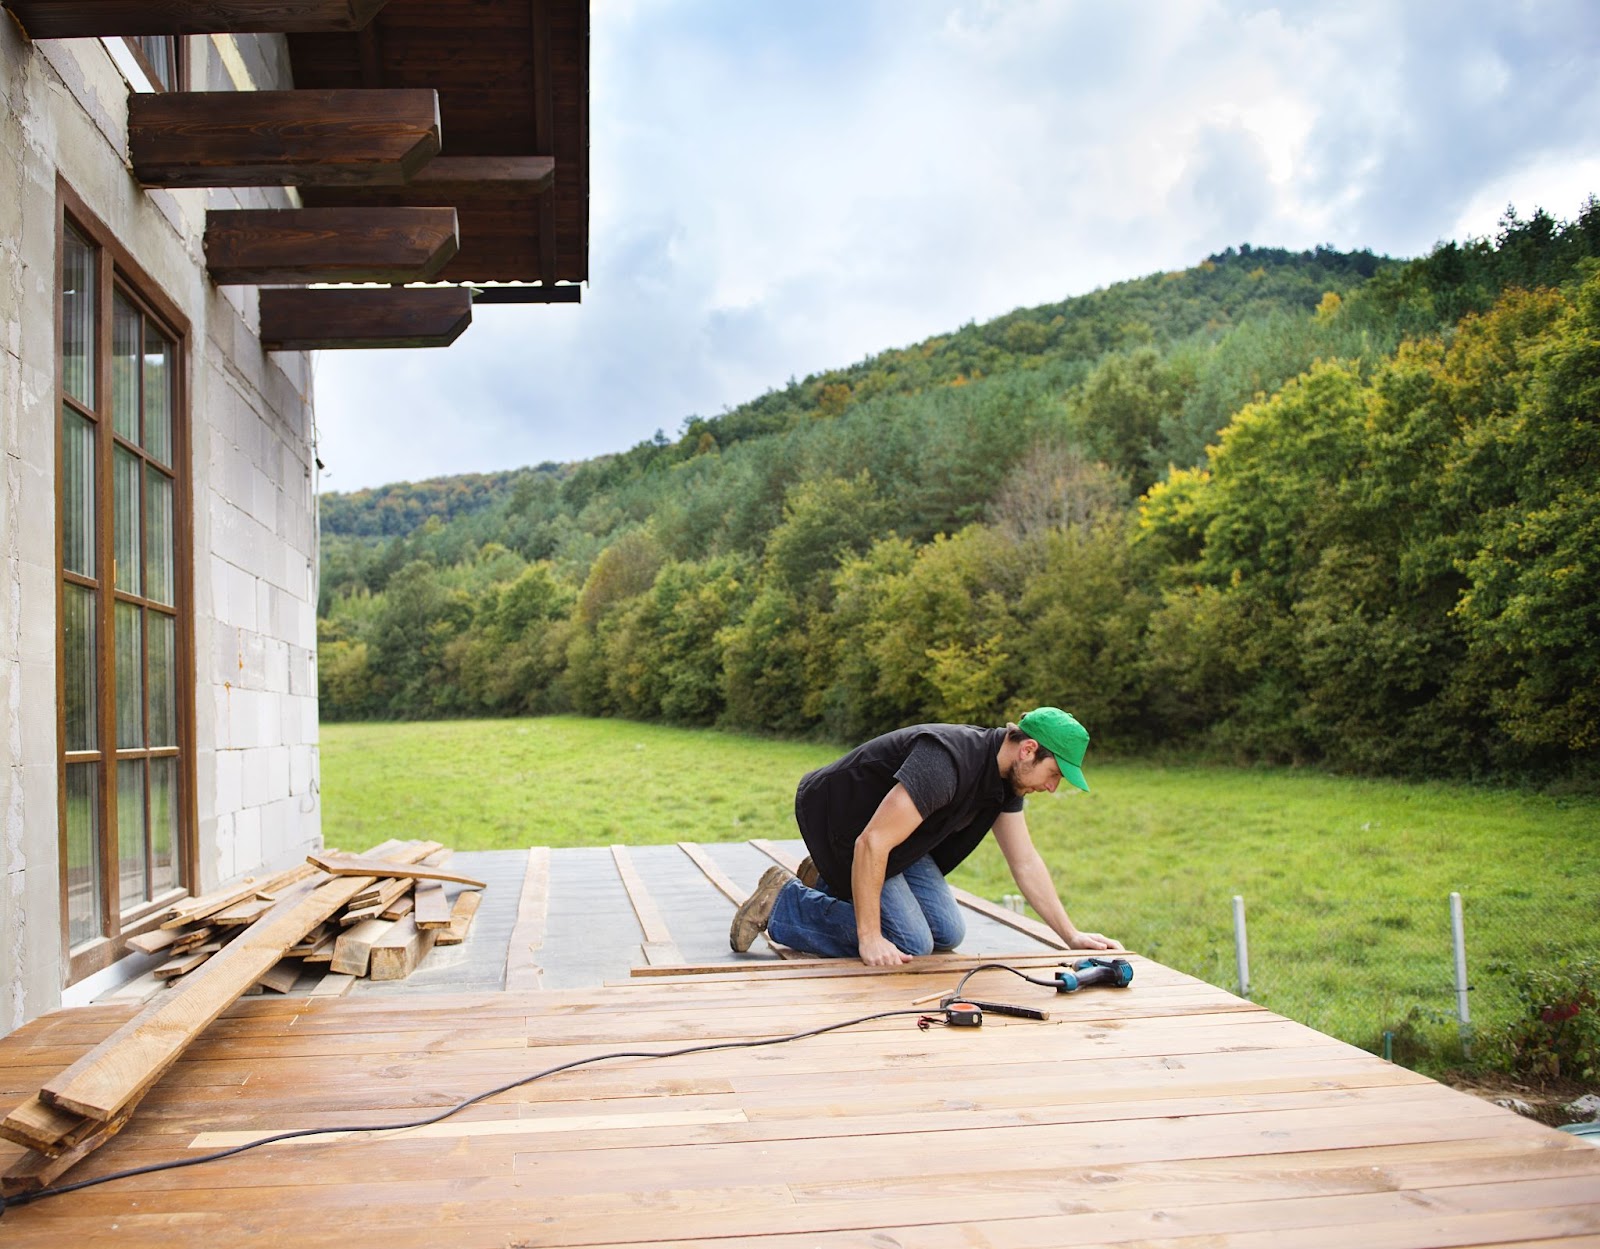 A handyman is installing wooden flooring outdoor.